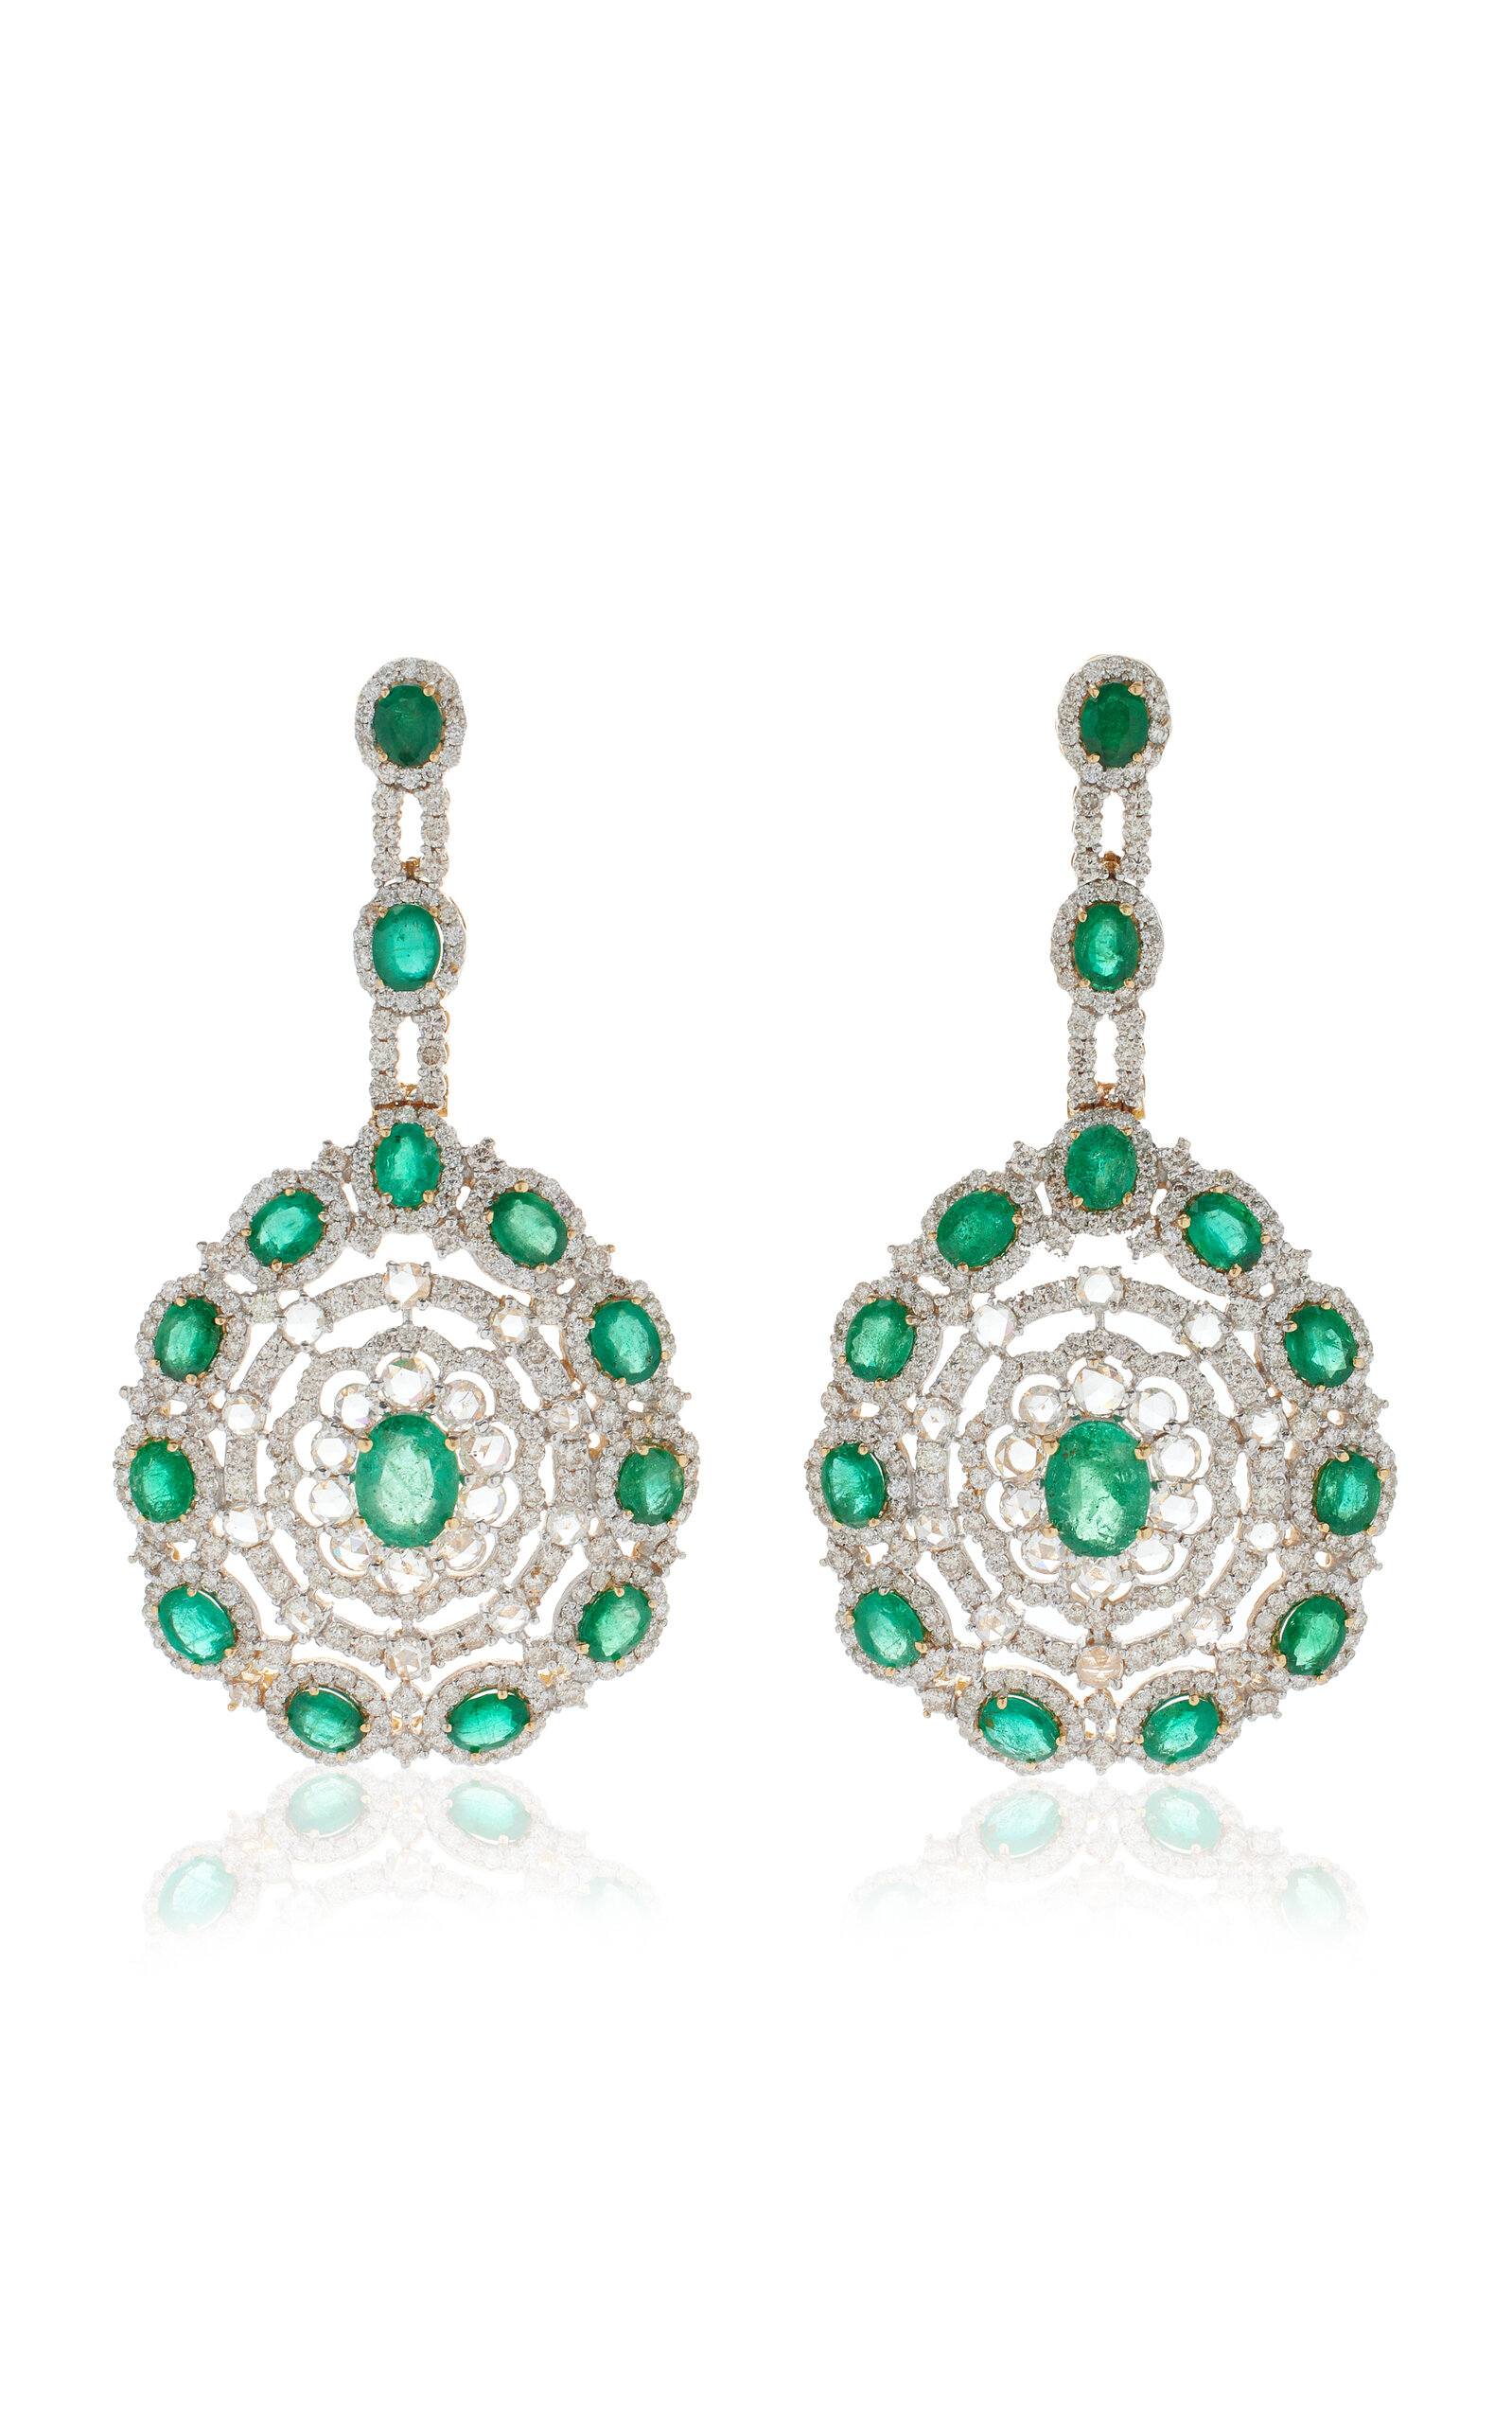 One of a Kind 18K White Gold Emerald & Diamond Blossom Earrings